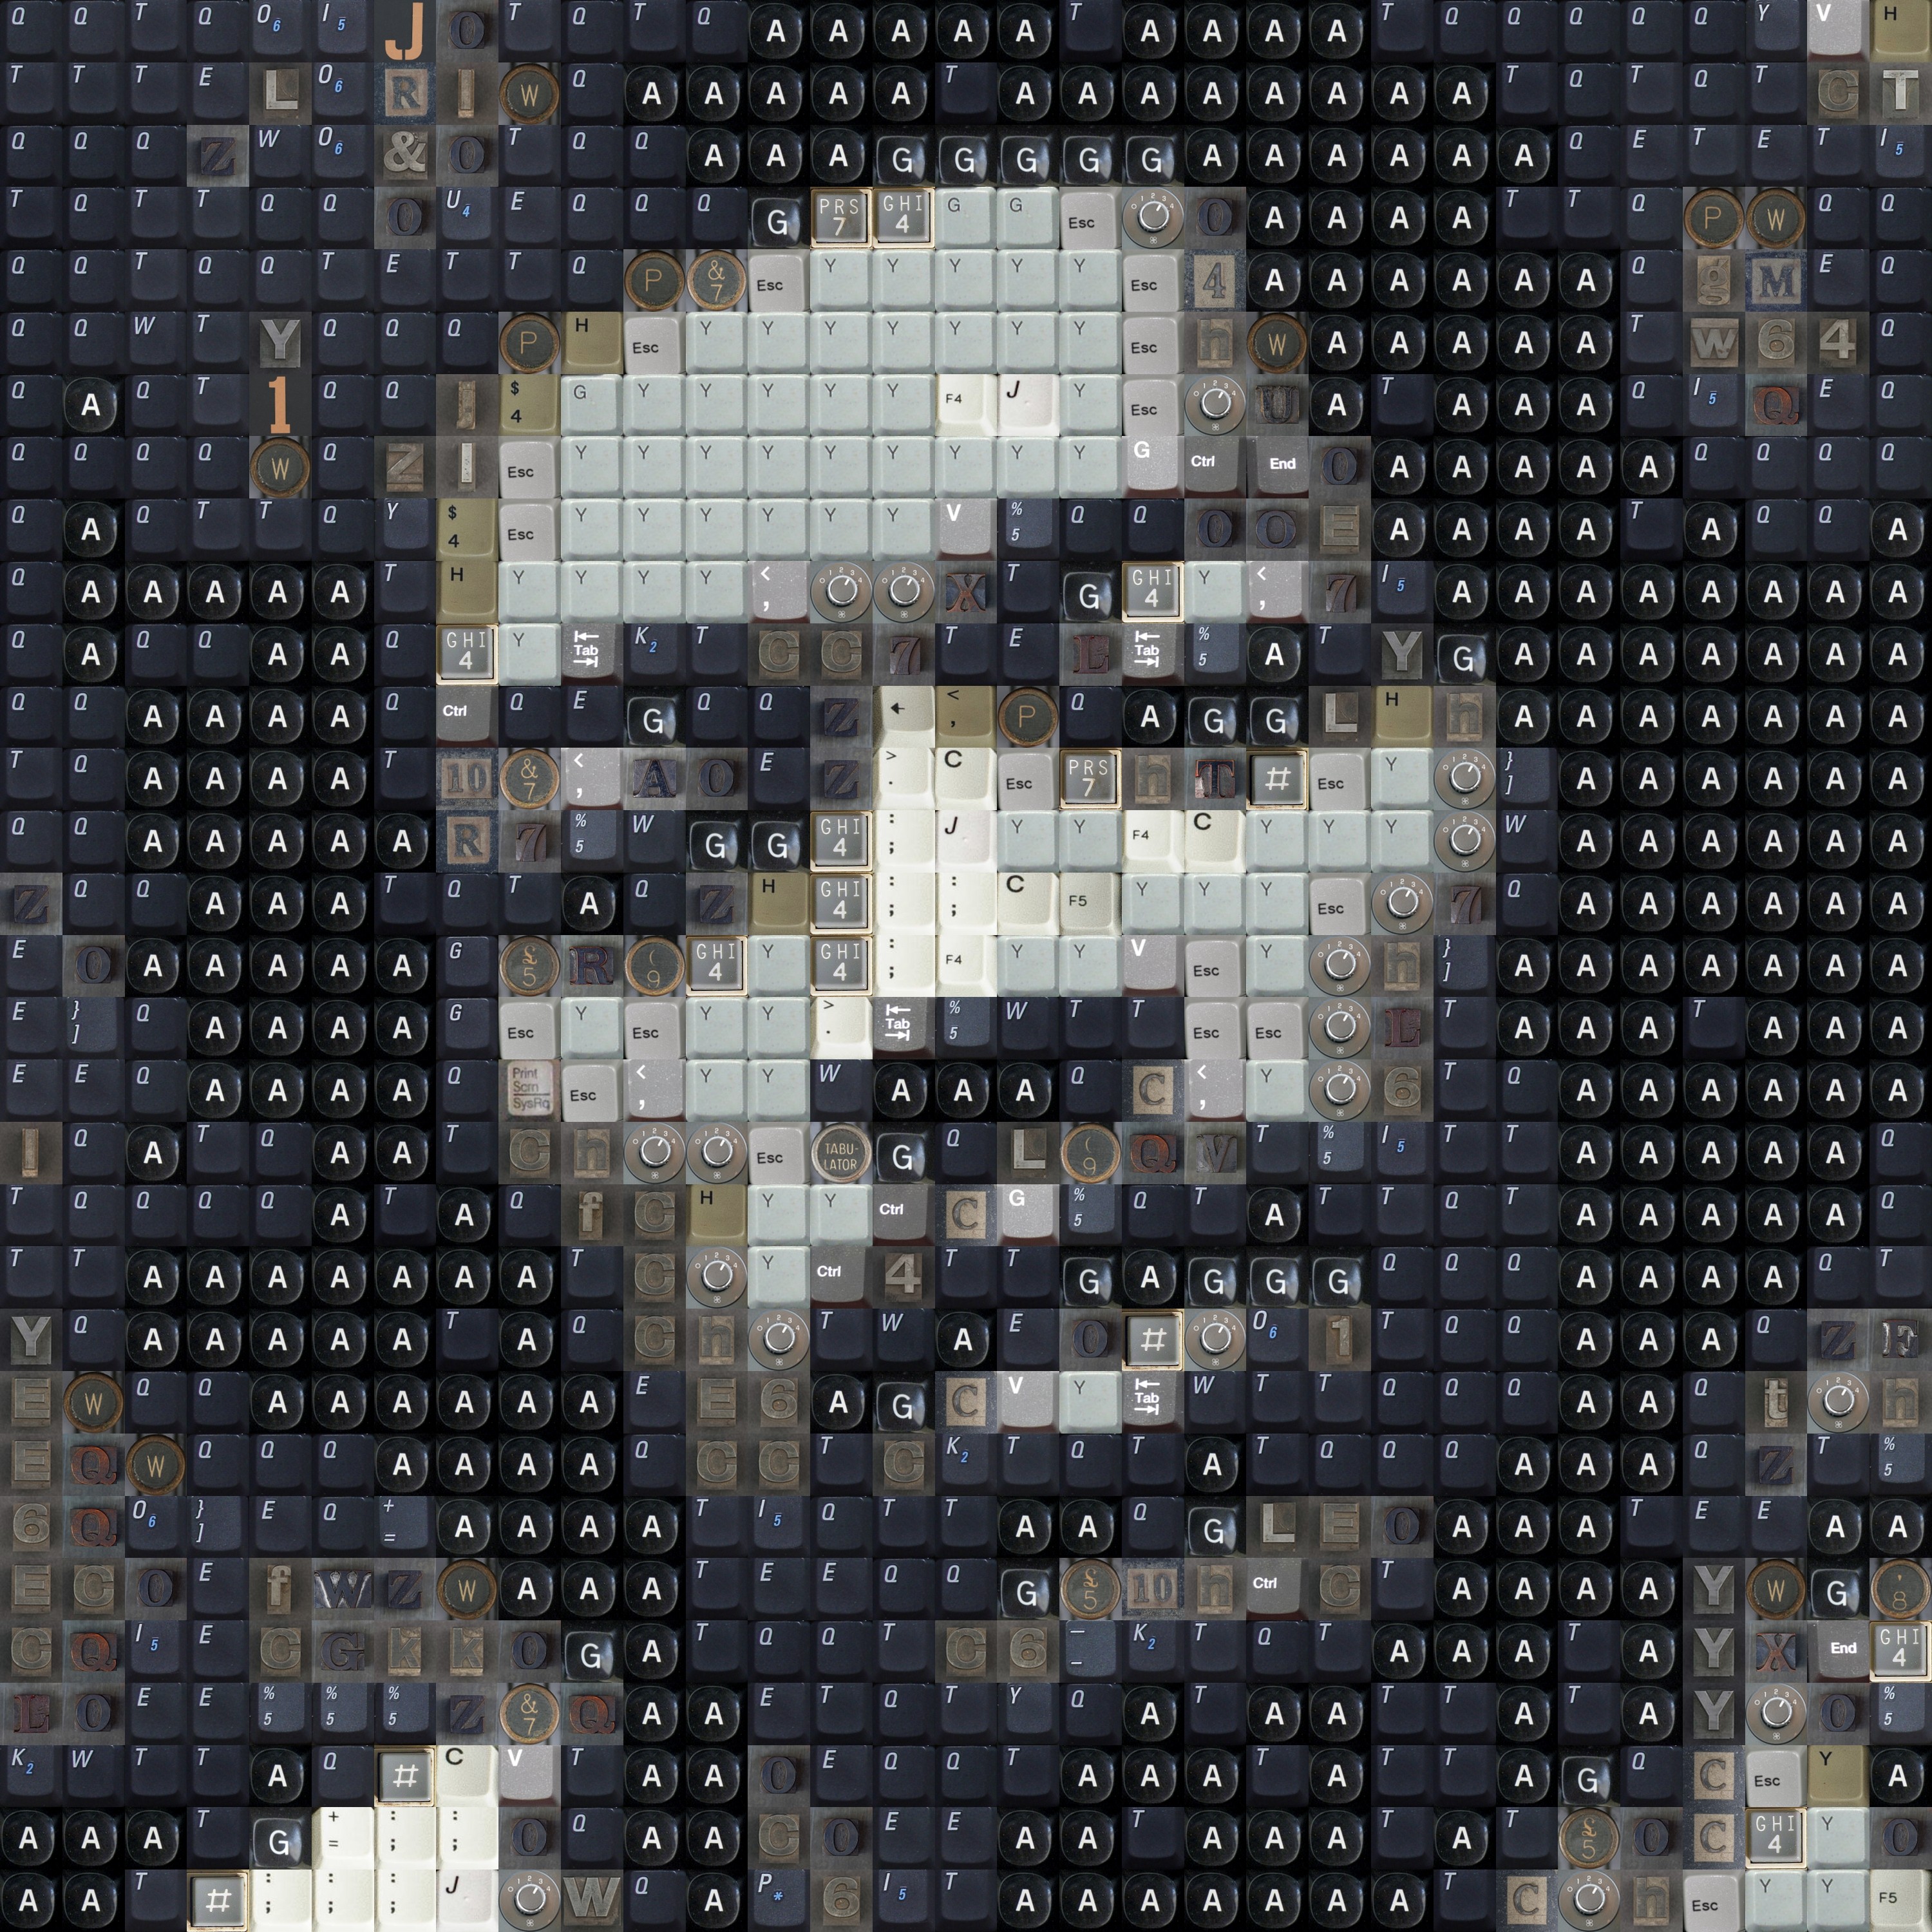 Artwork Mosaic Men Face Musician Jimi Hendrix Singer Electric Guitar Keyboards Text Numbers Portrait 3000x3000